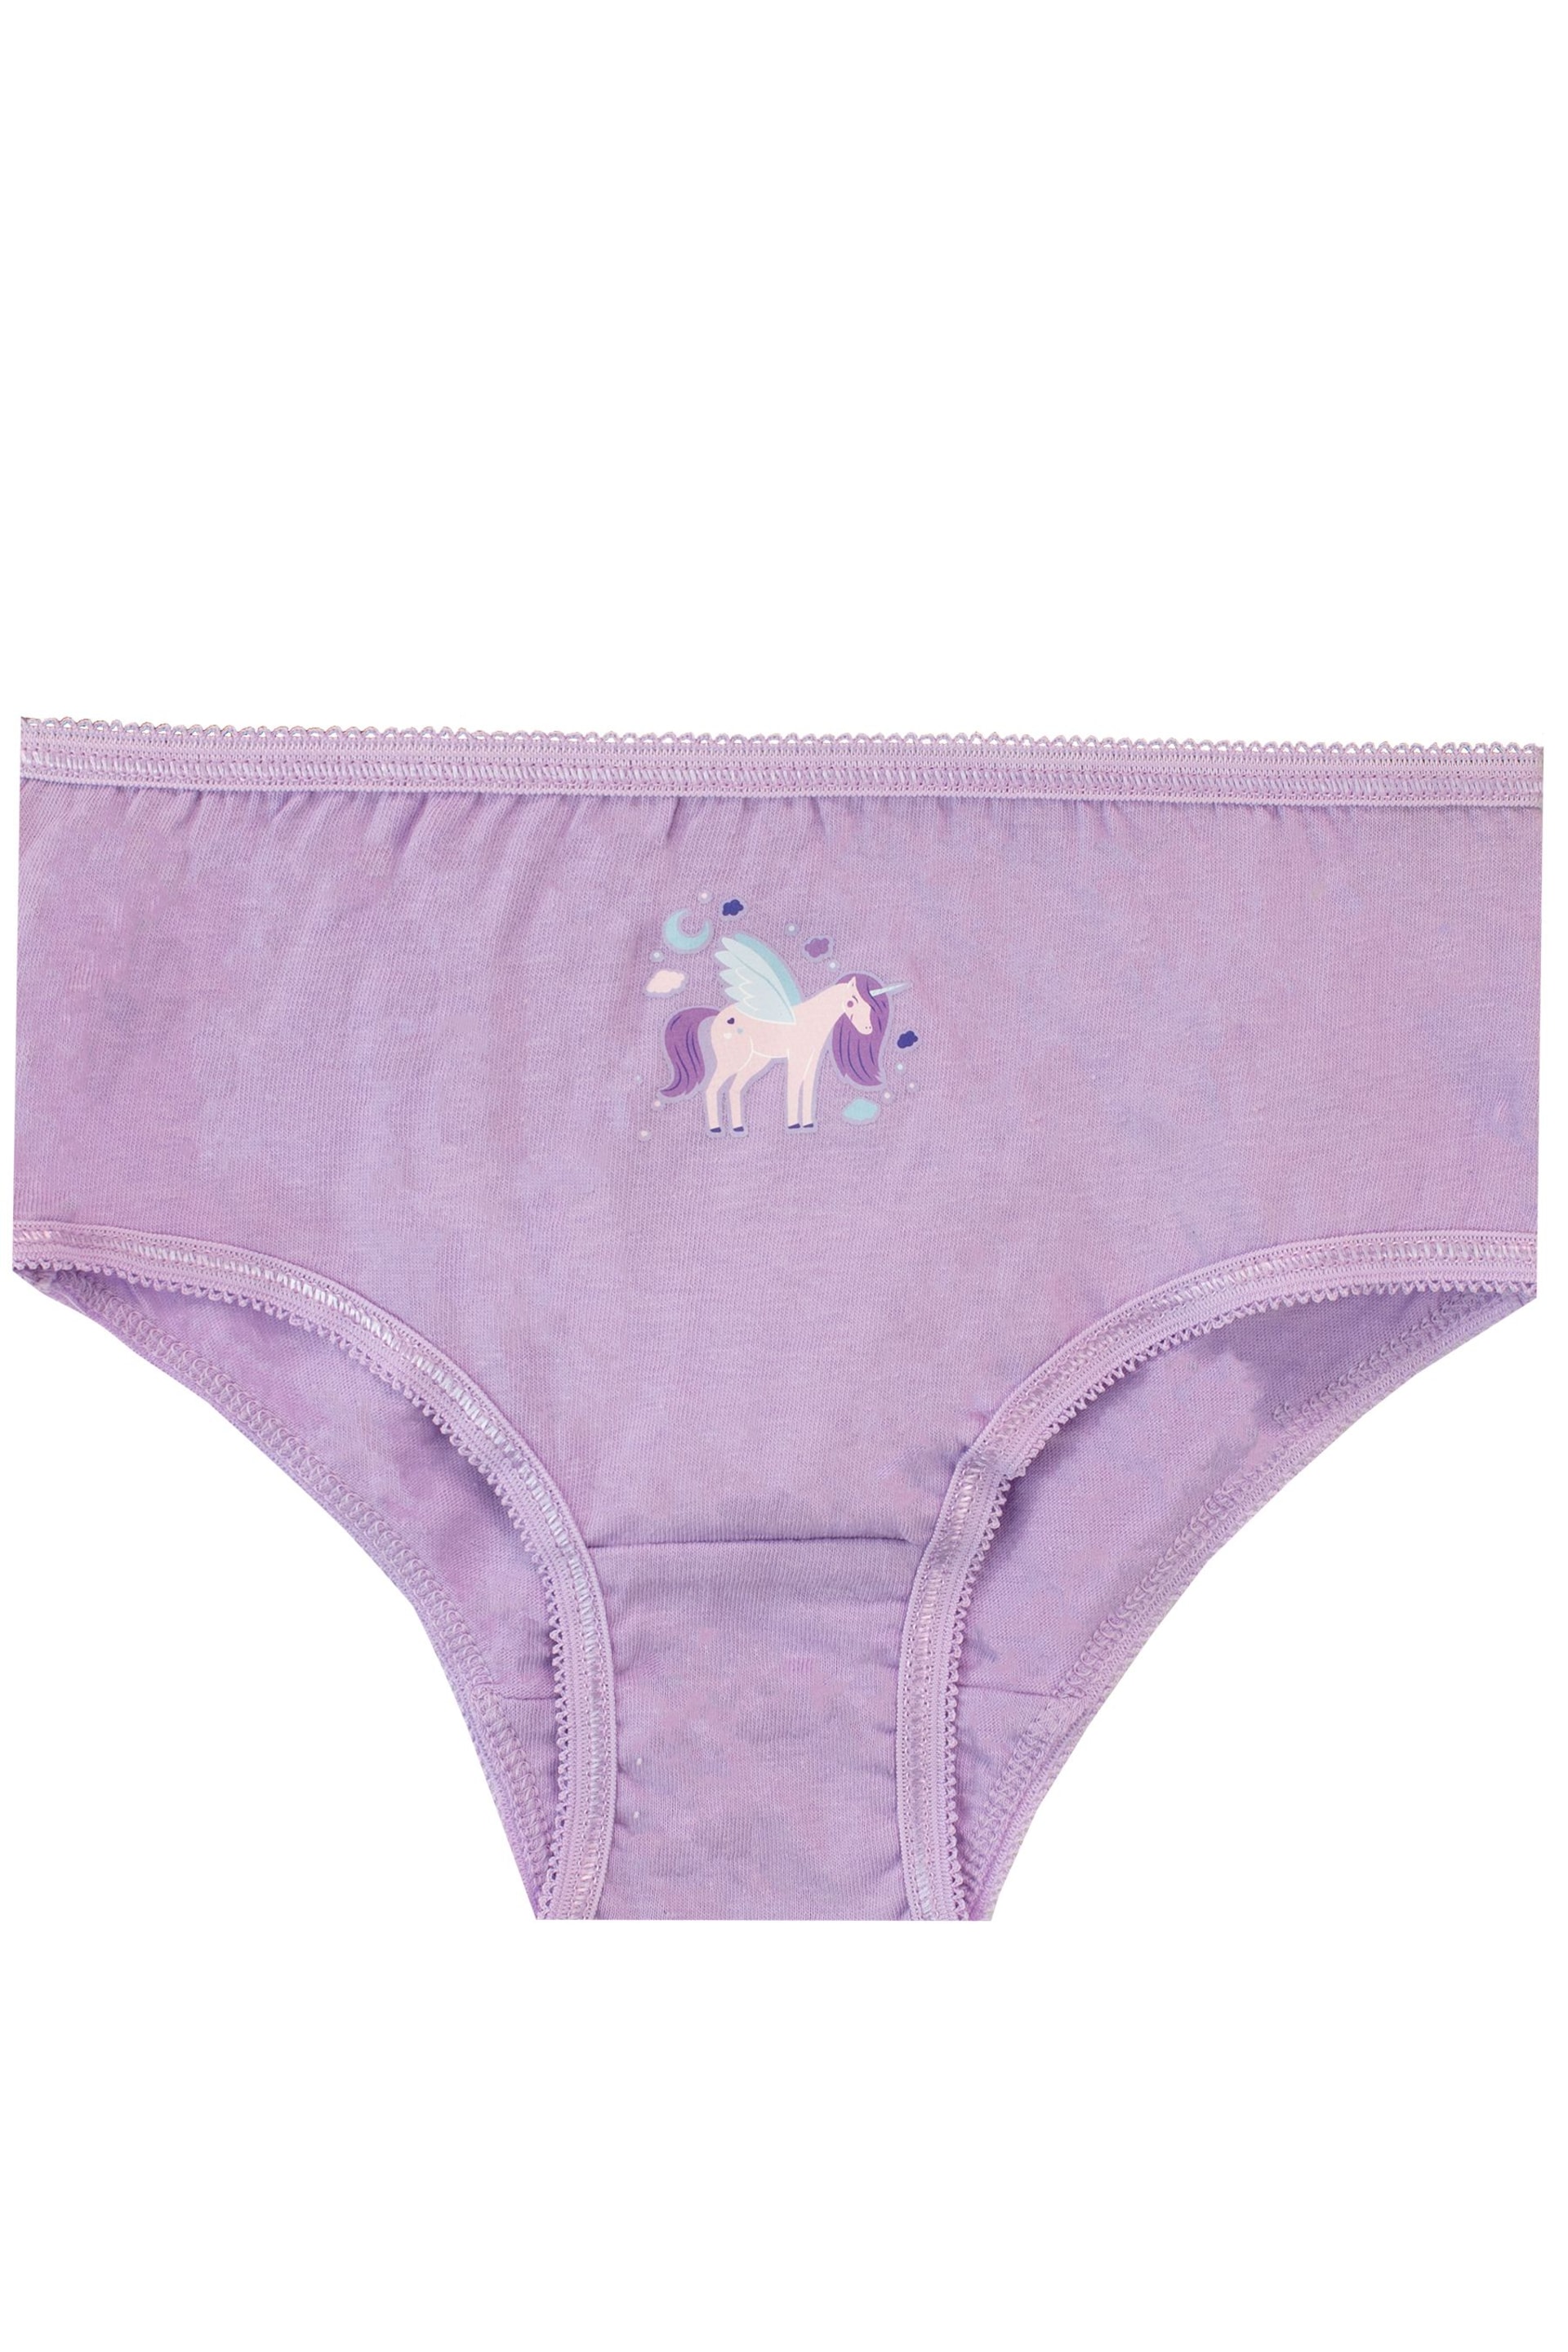 Harry Bear Pink Girls Unicorn Underwear 5 Packs - Image 3 of 5